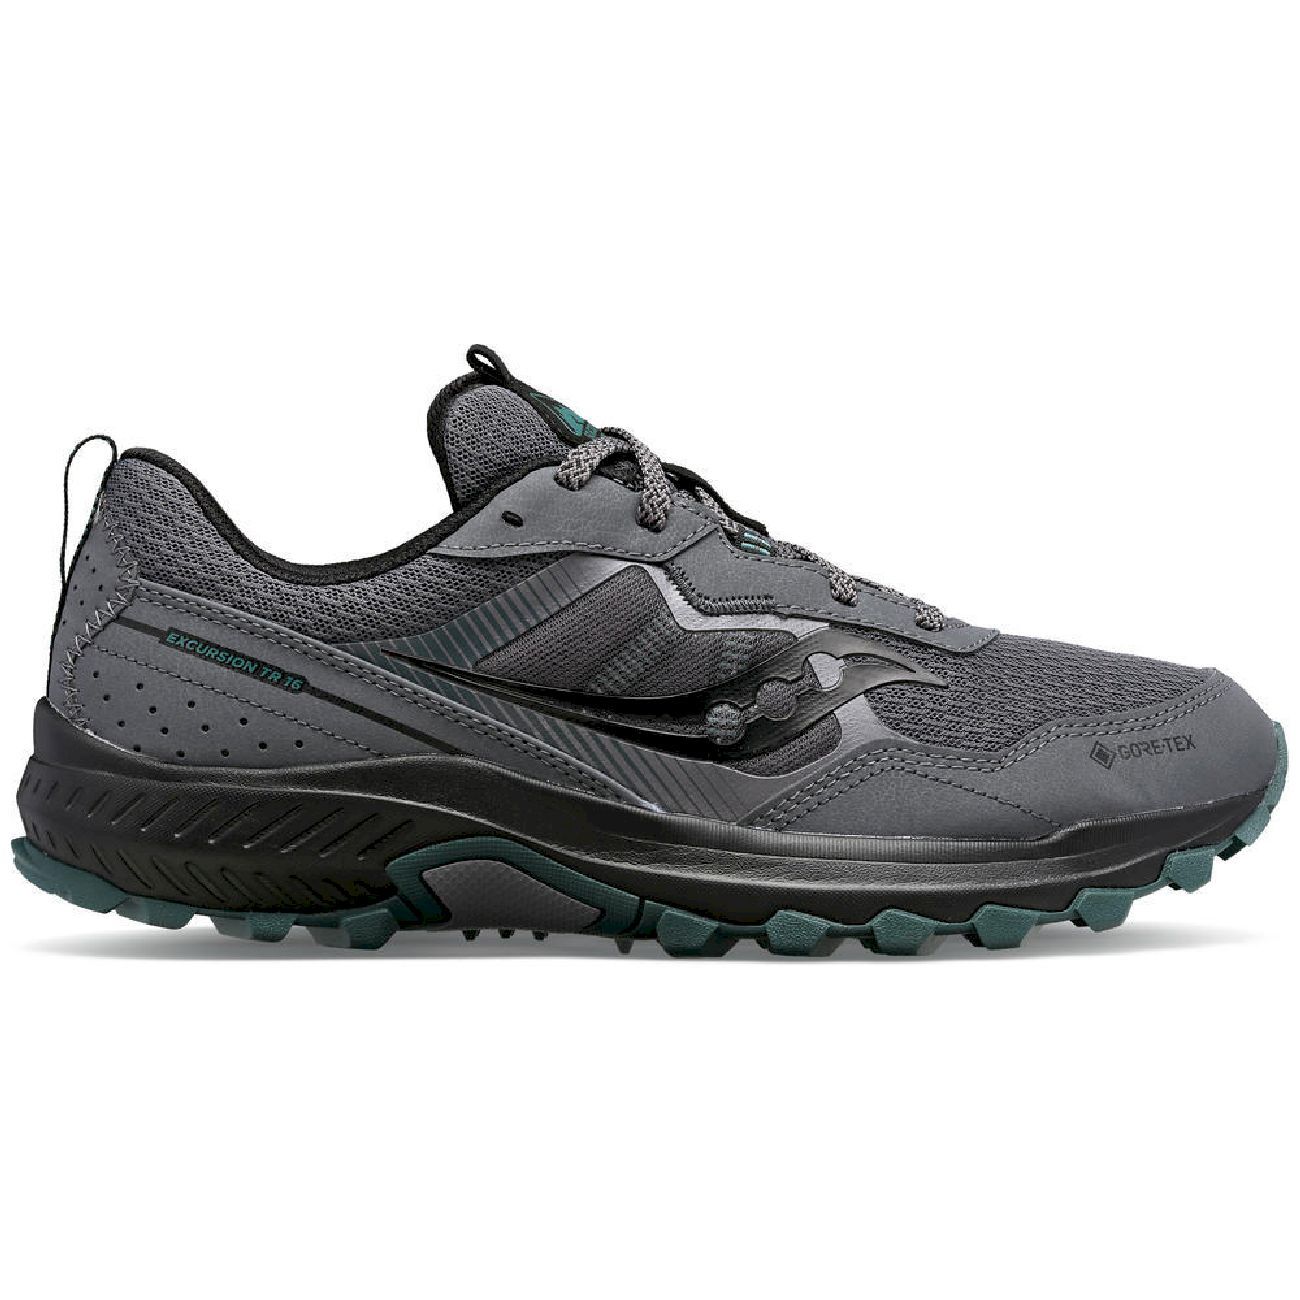 Saucony Excursion TR16 GTX - Trail running shoes - Men's